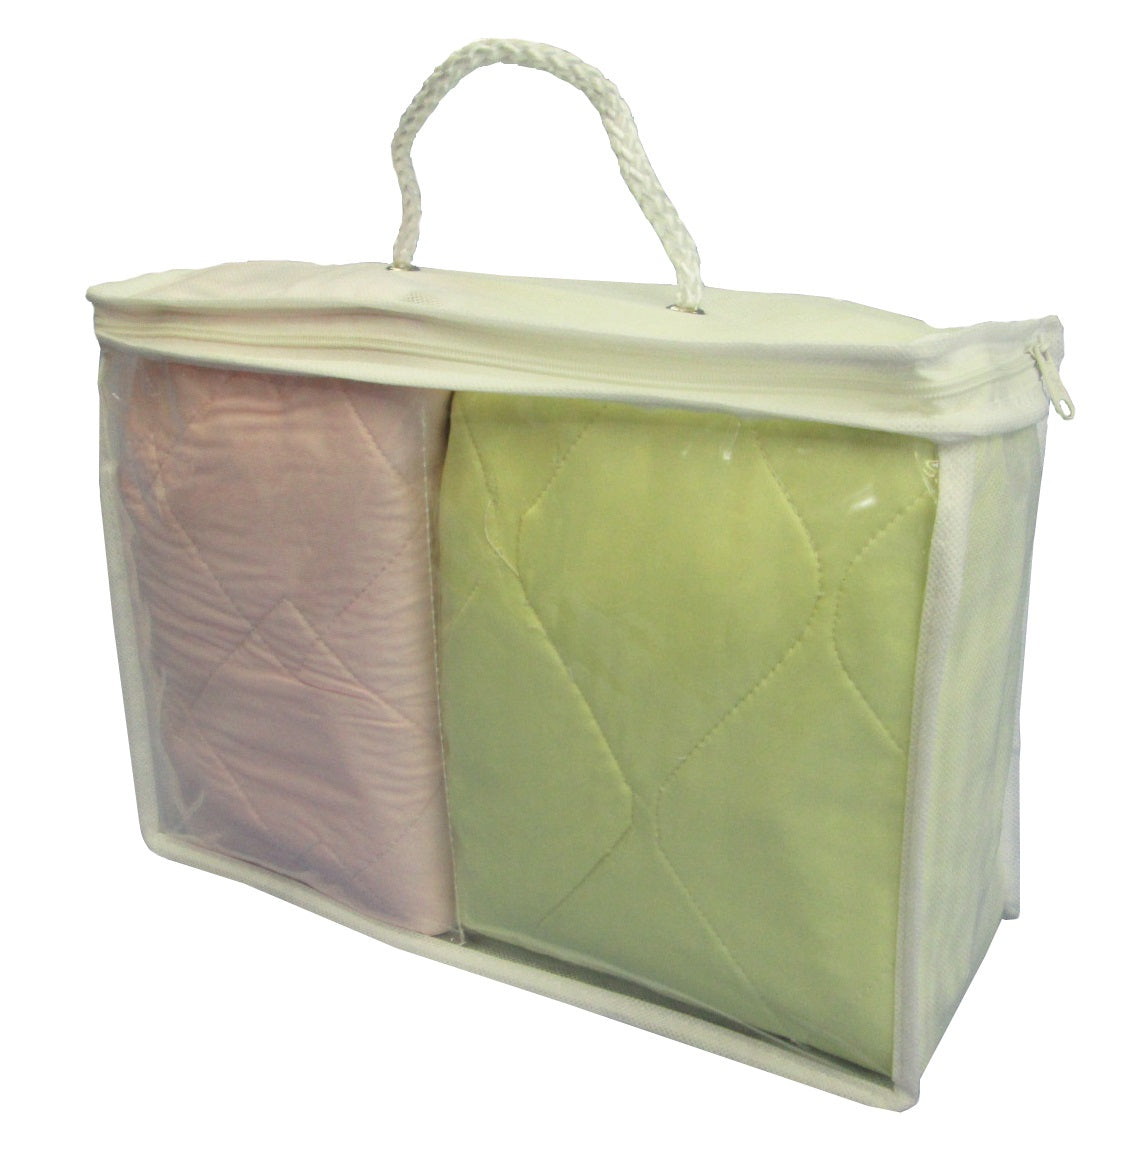 JLSB-0029 Sewn Bag